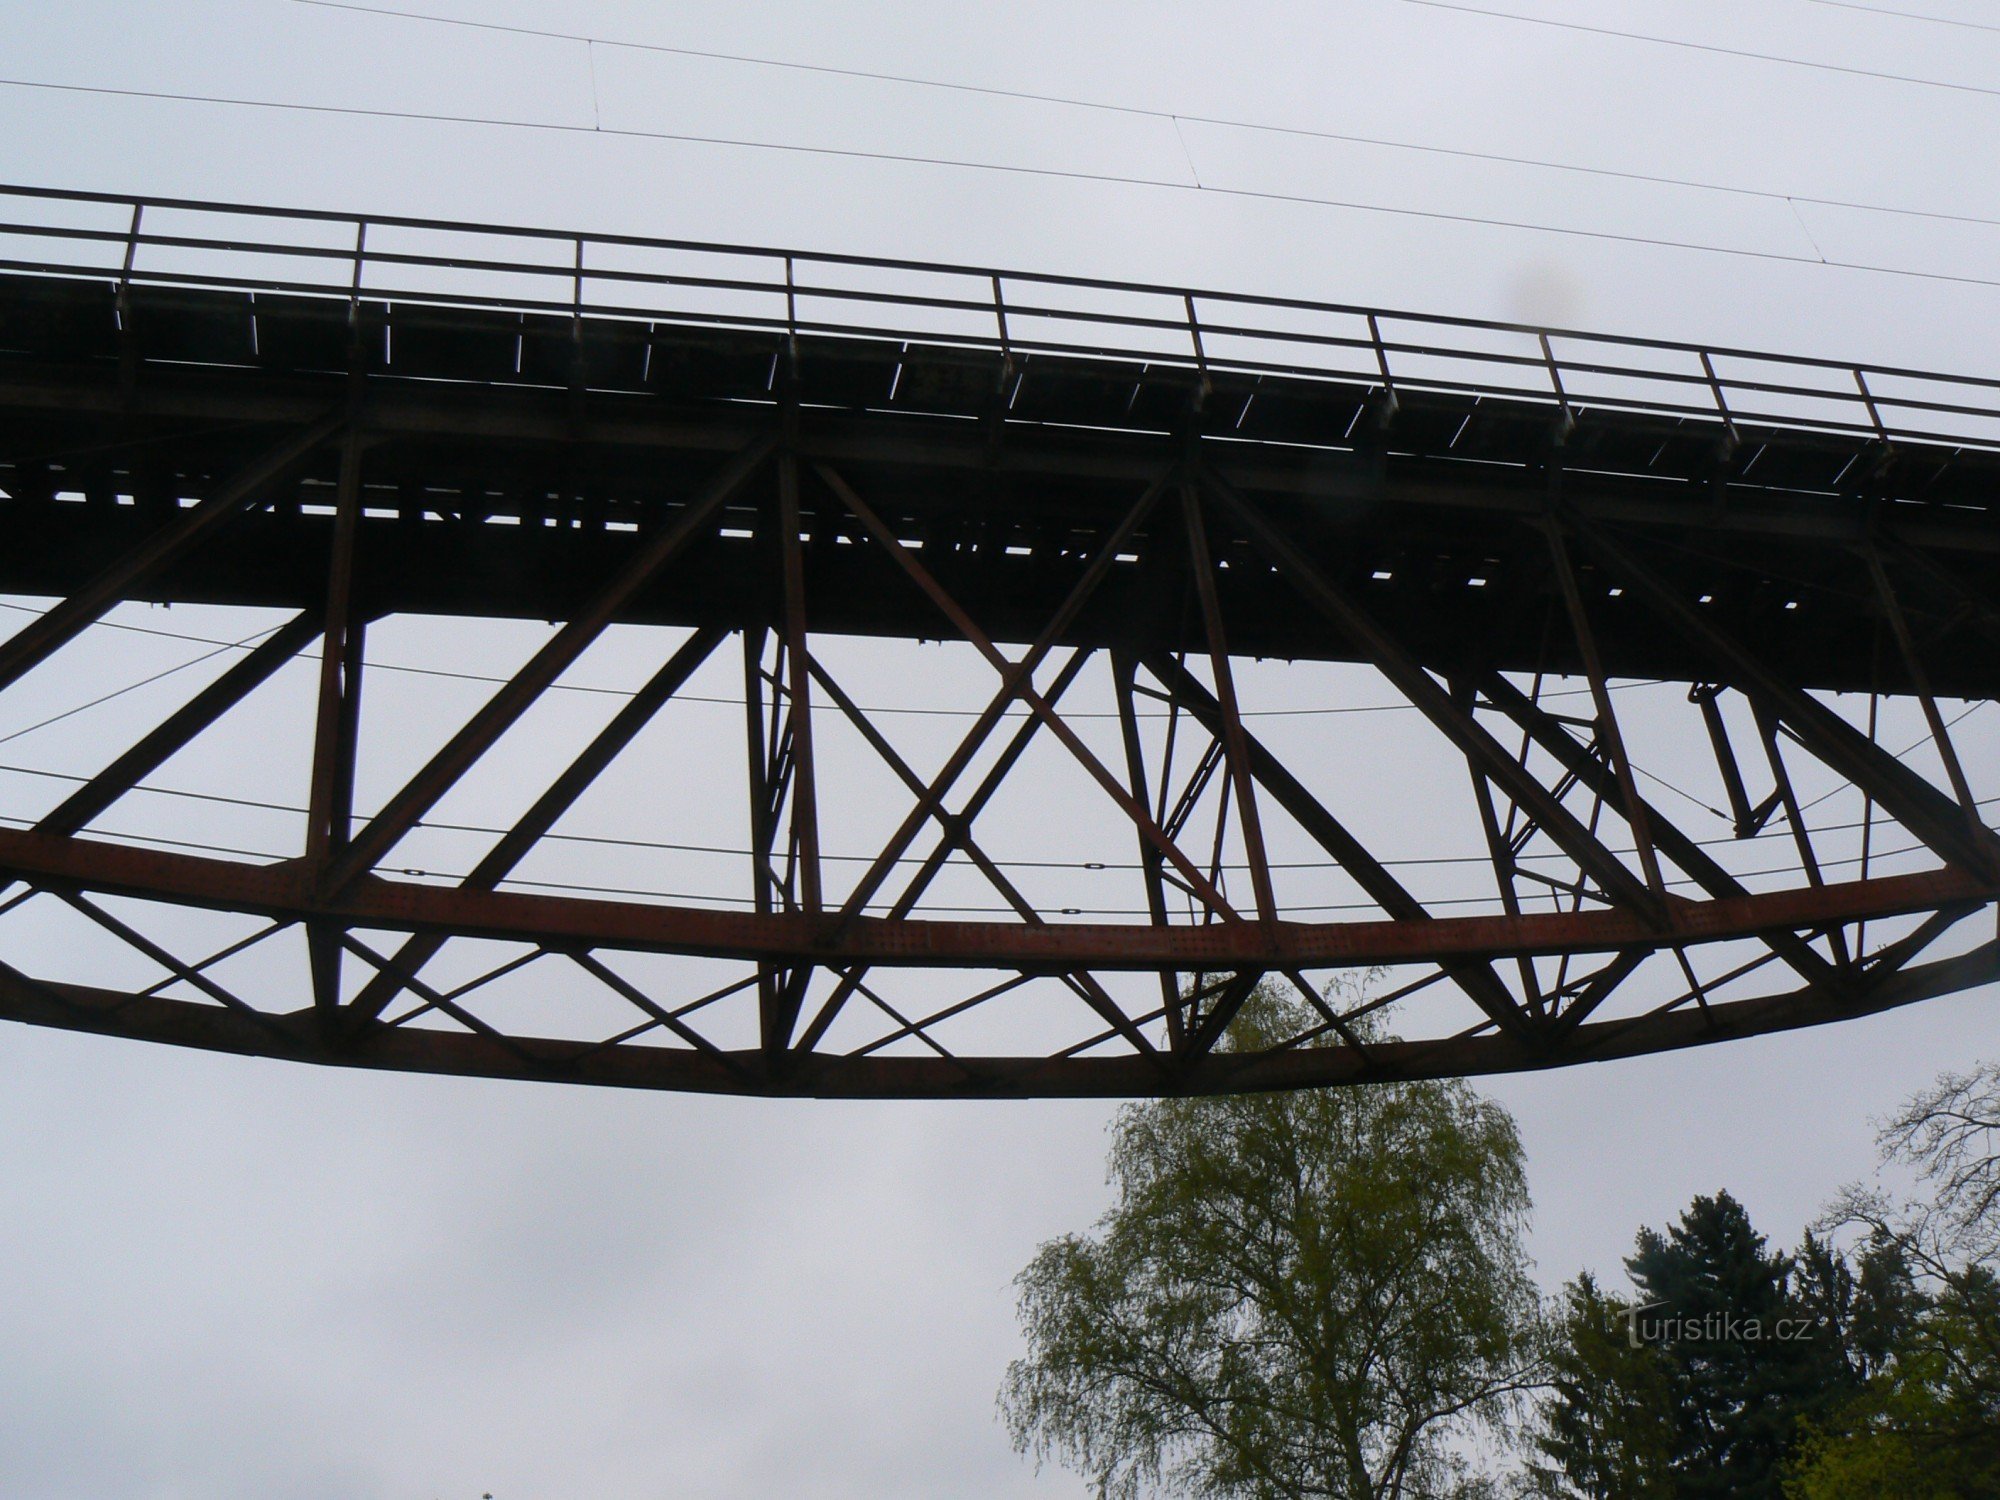 The bridge structure has a semi-parabolic - downward facing - shape.